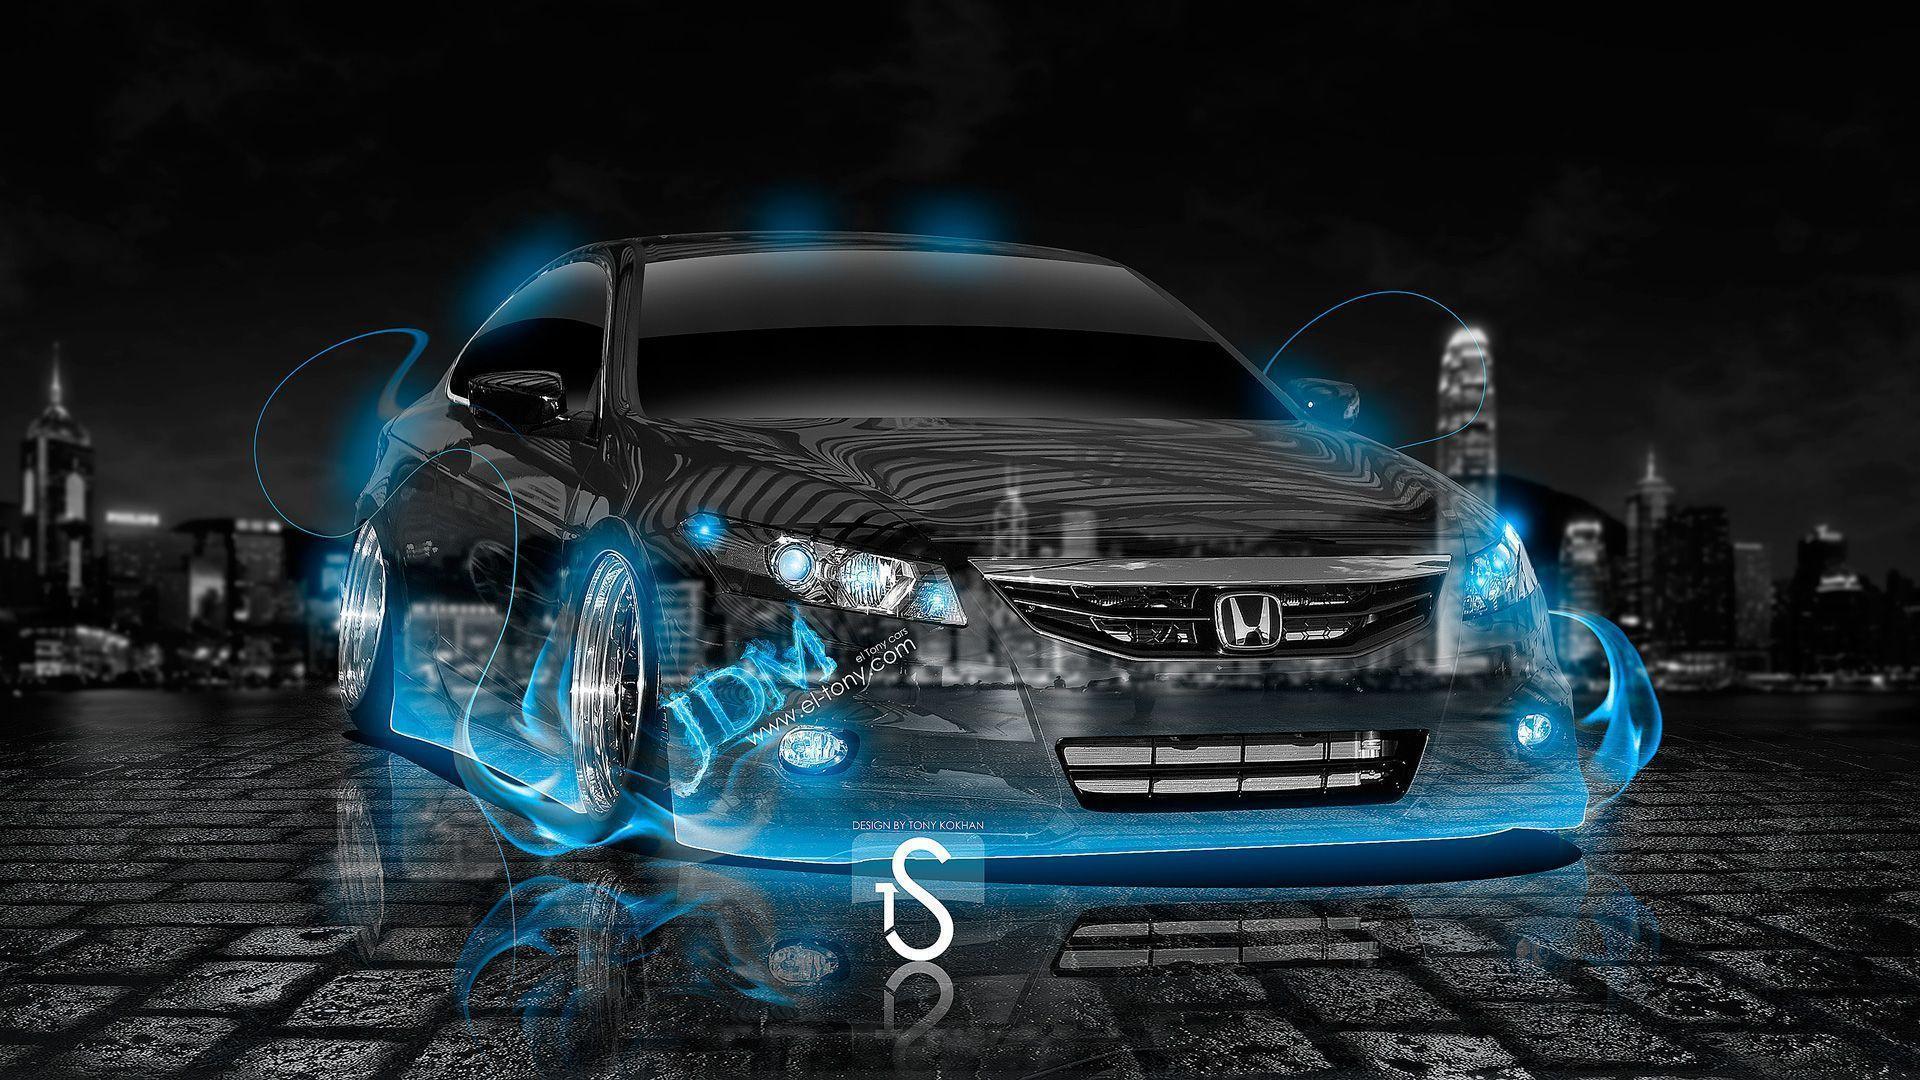 image For > Black Honda Civic Si Wallpaper